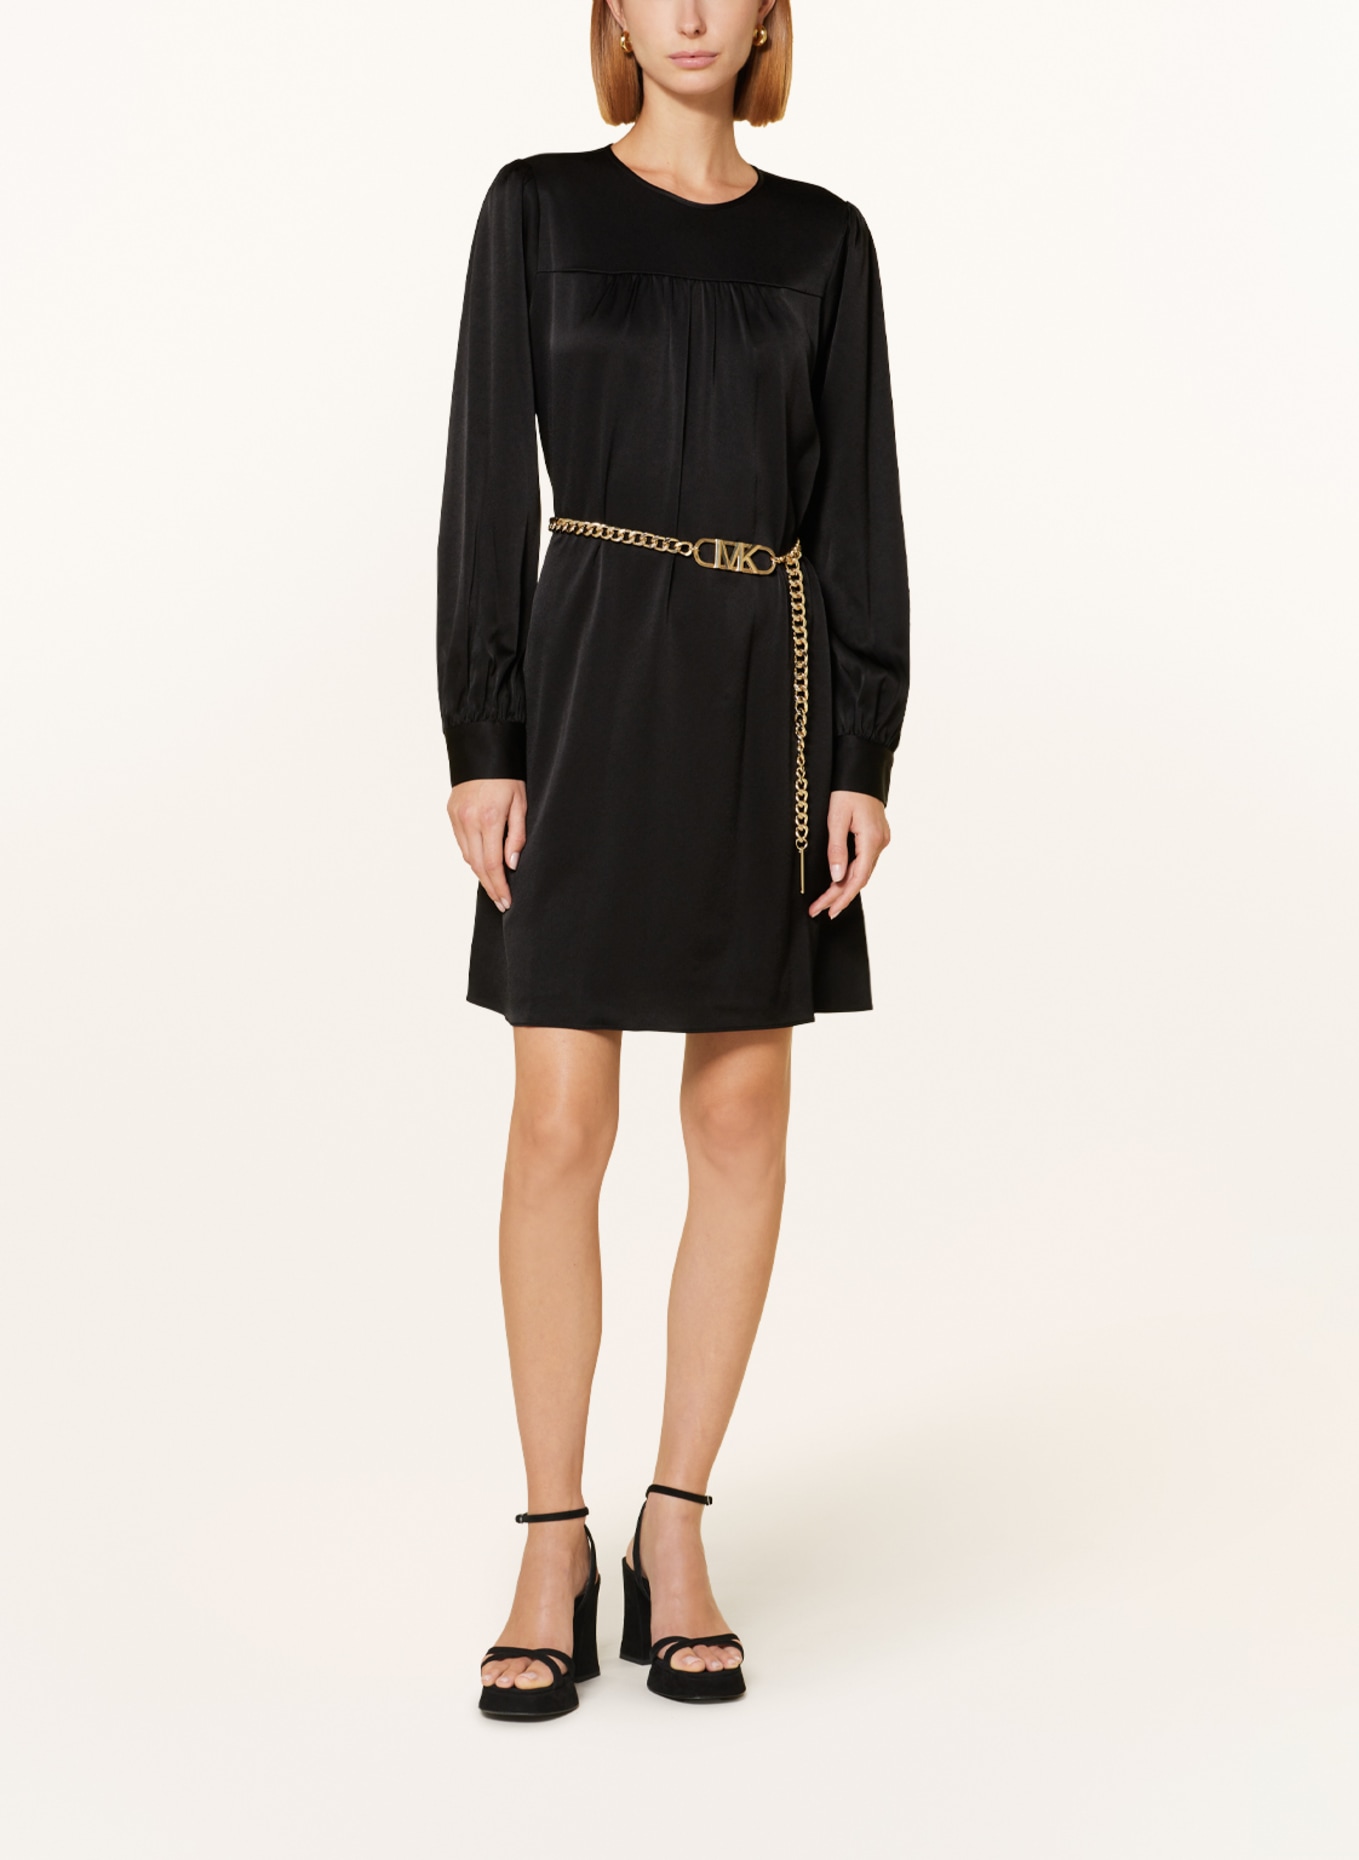 MICHAEL KORS Satin dress, Color: BLACK (Image 2)